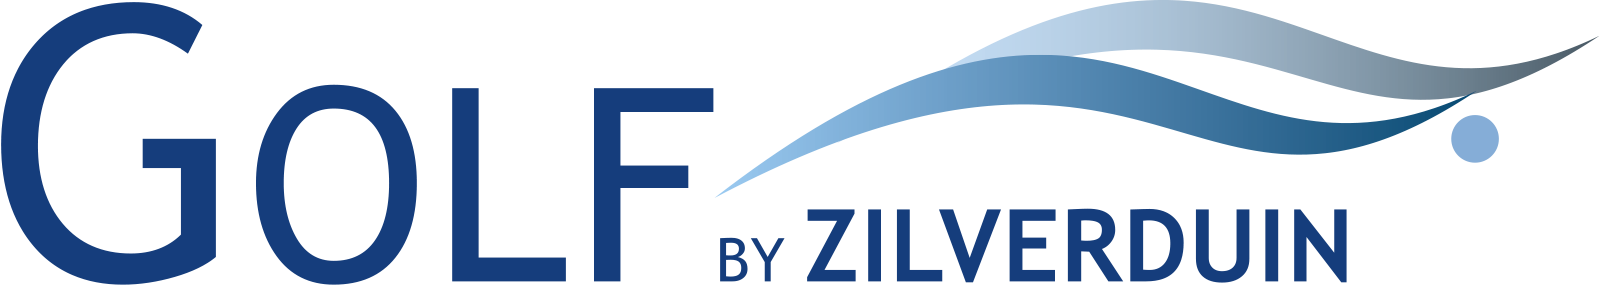 Golf by Zilverduin logo